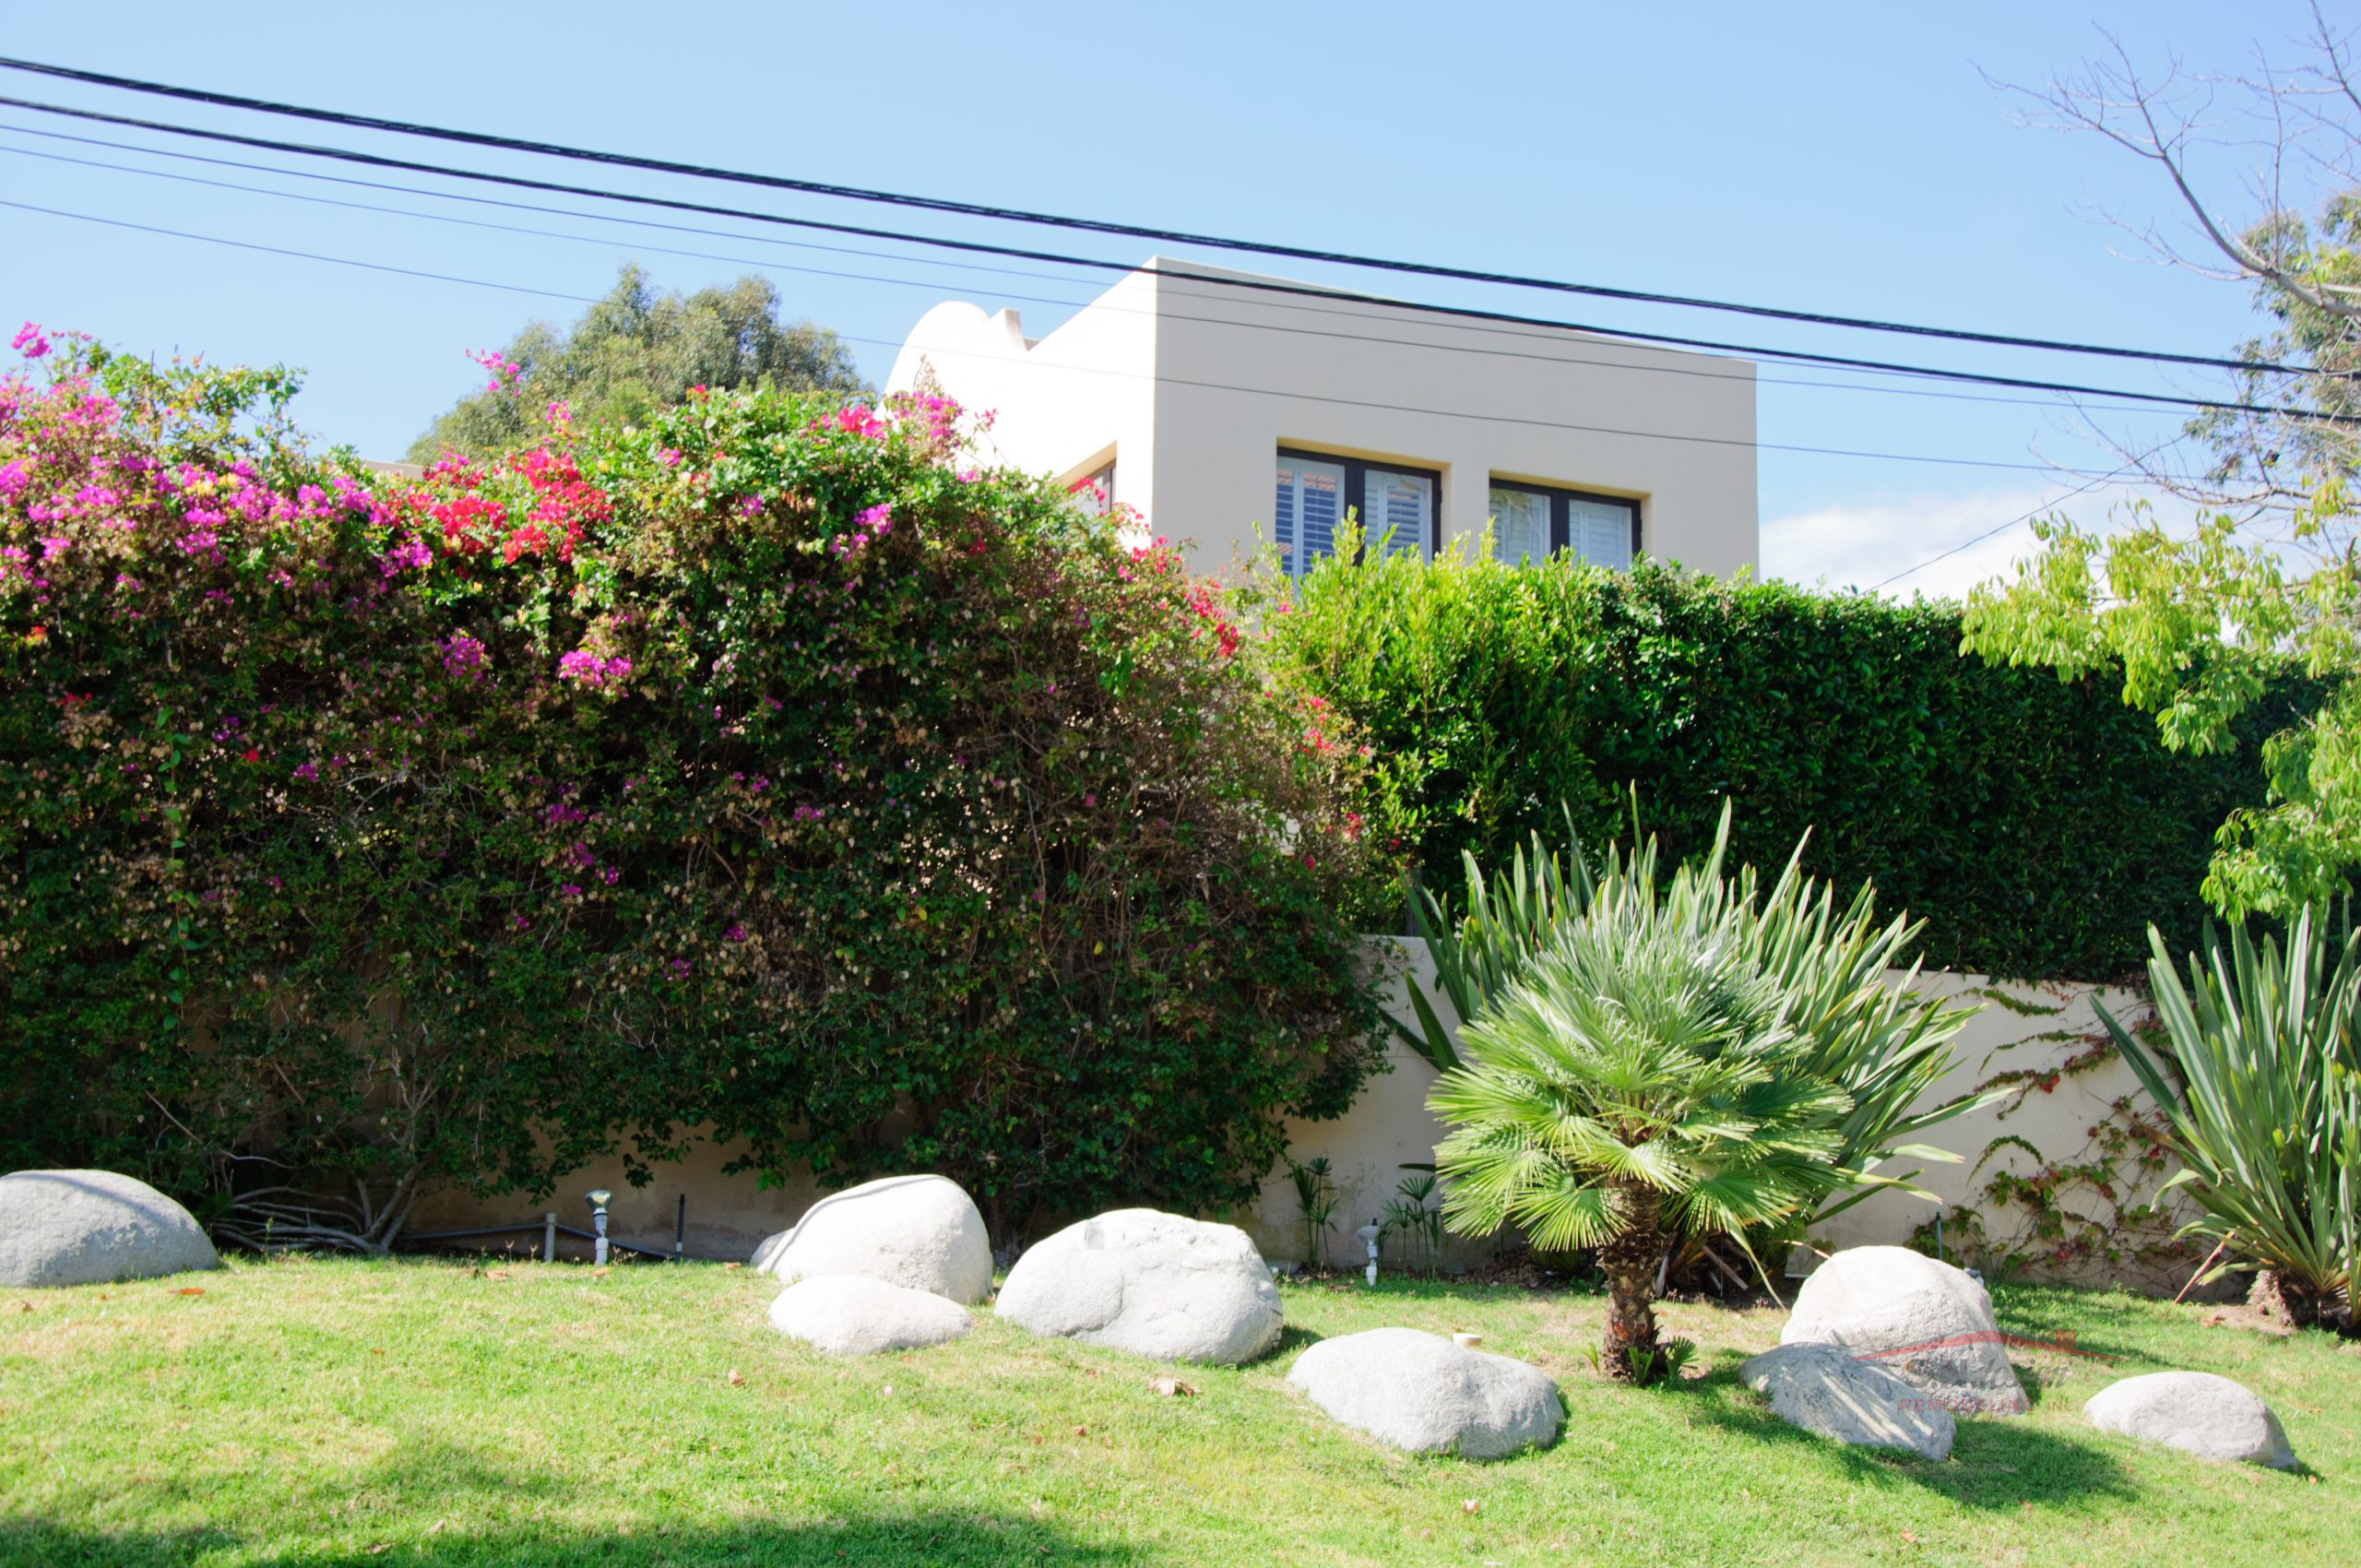 House with green lawn manicured frontyard garden in suburban residential neighborhood